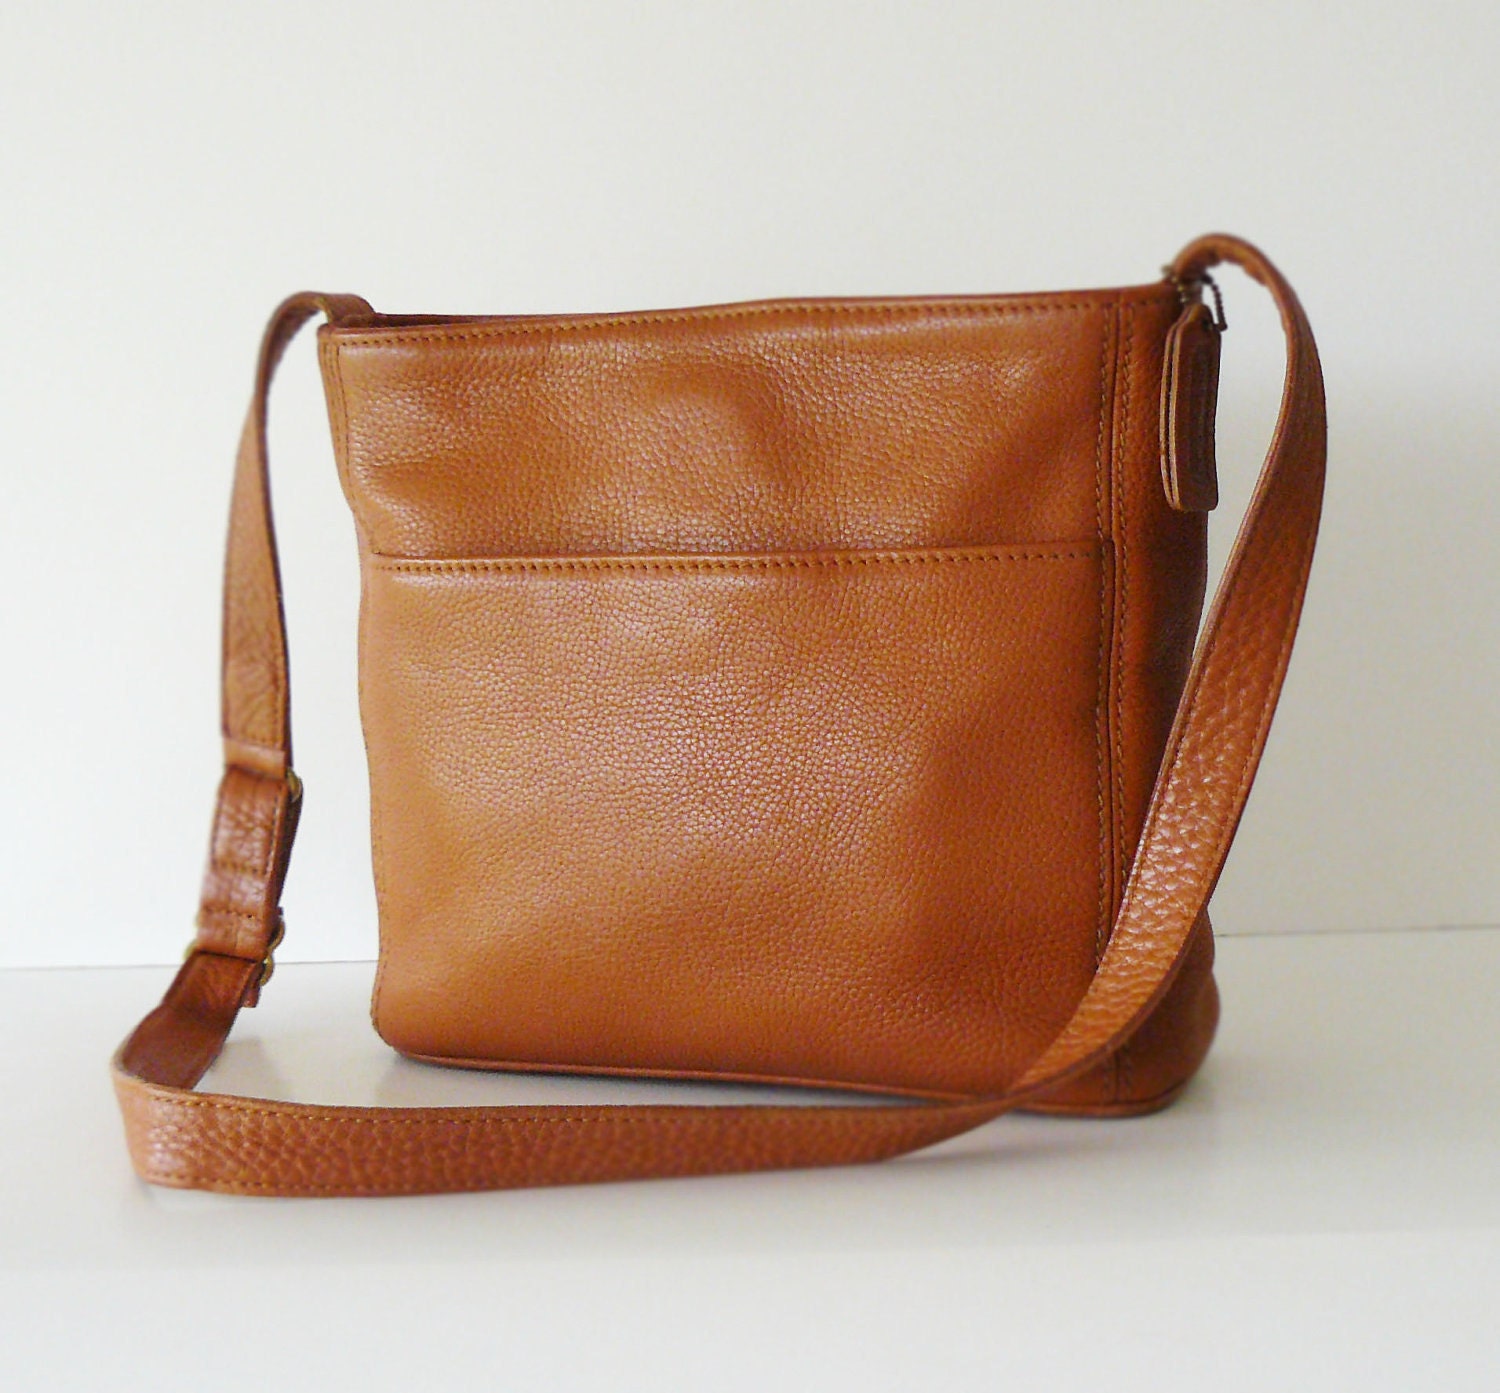 Vintage Coach Sonoma Leather Bucket Shoulder Bag by belmodo